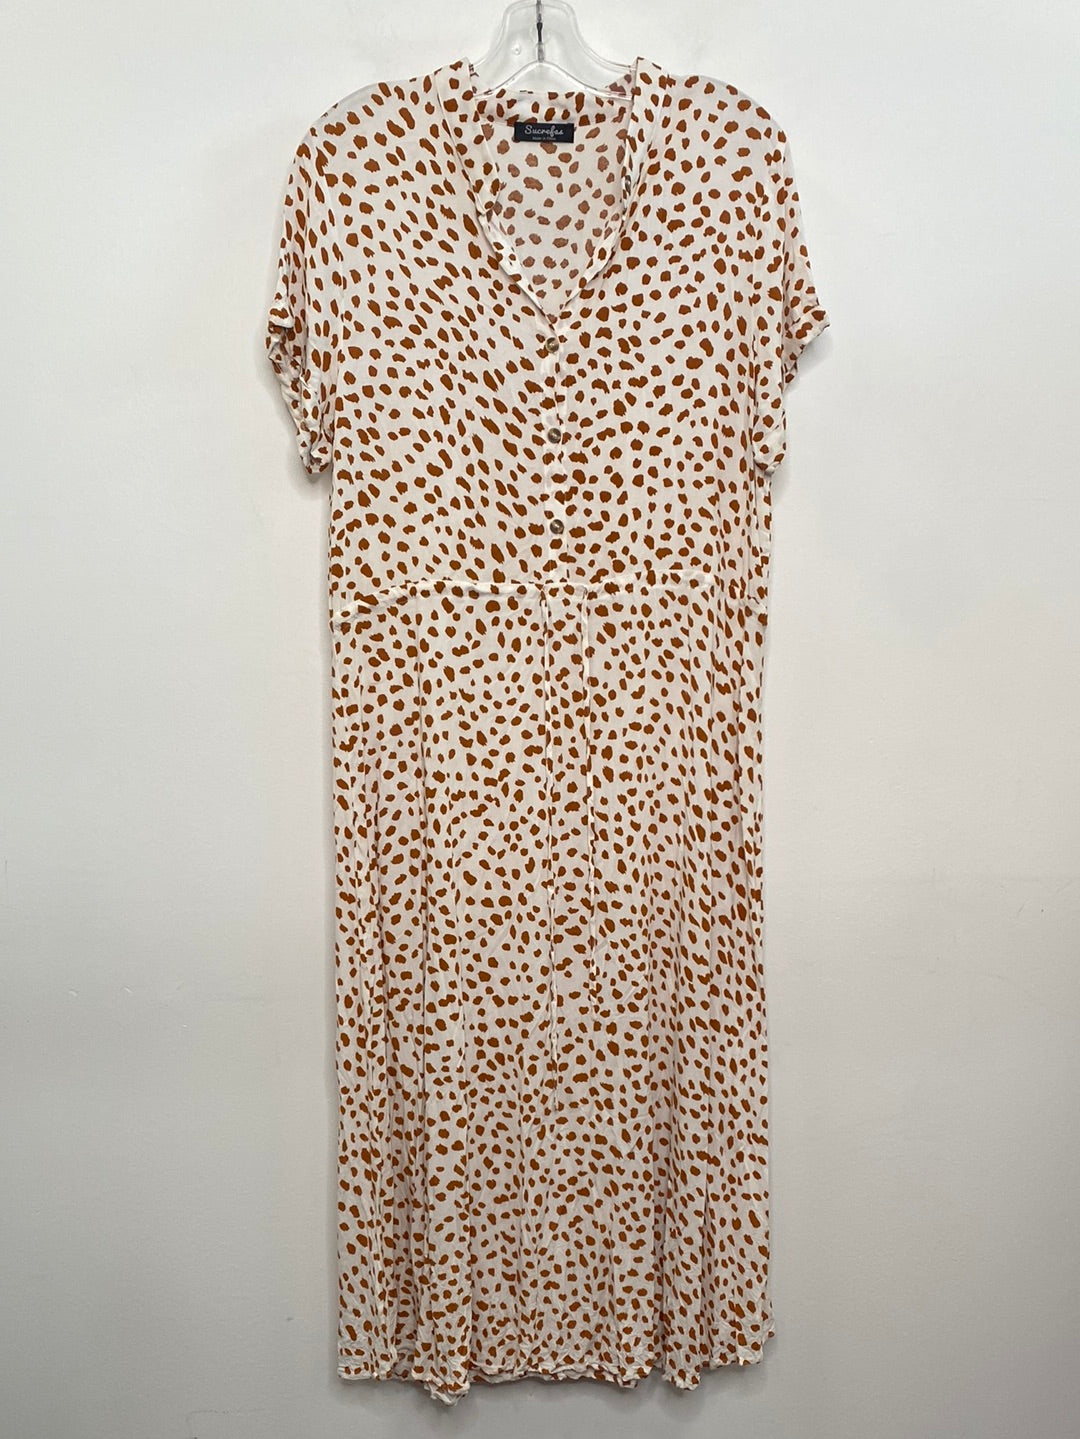 Sucrefas Animal Print Dress (XL)